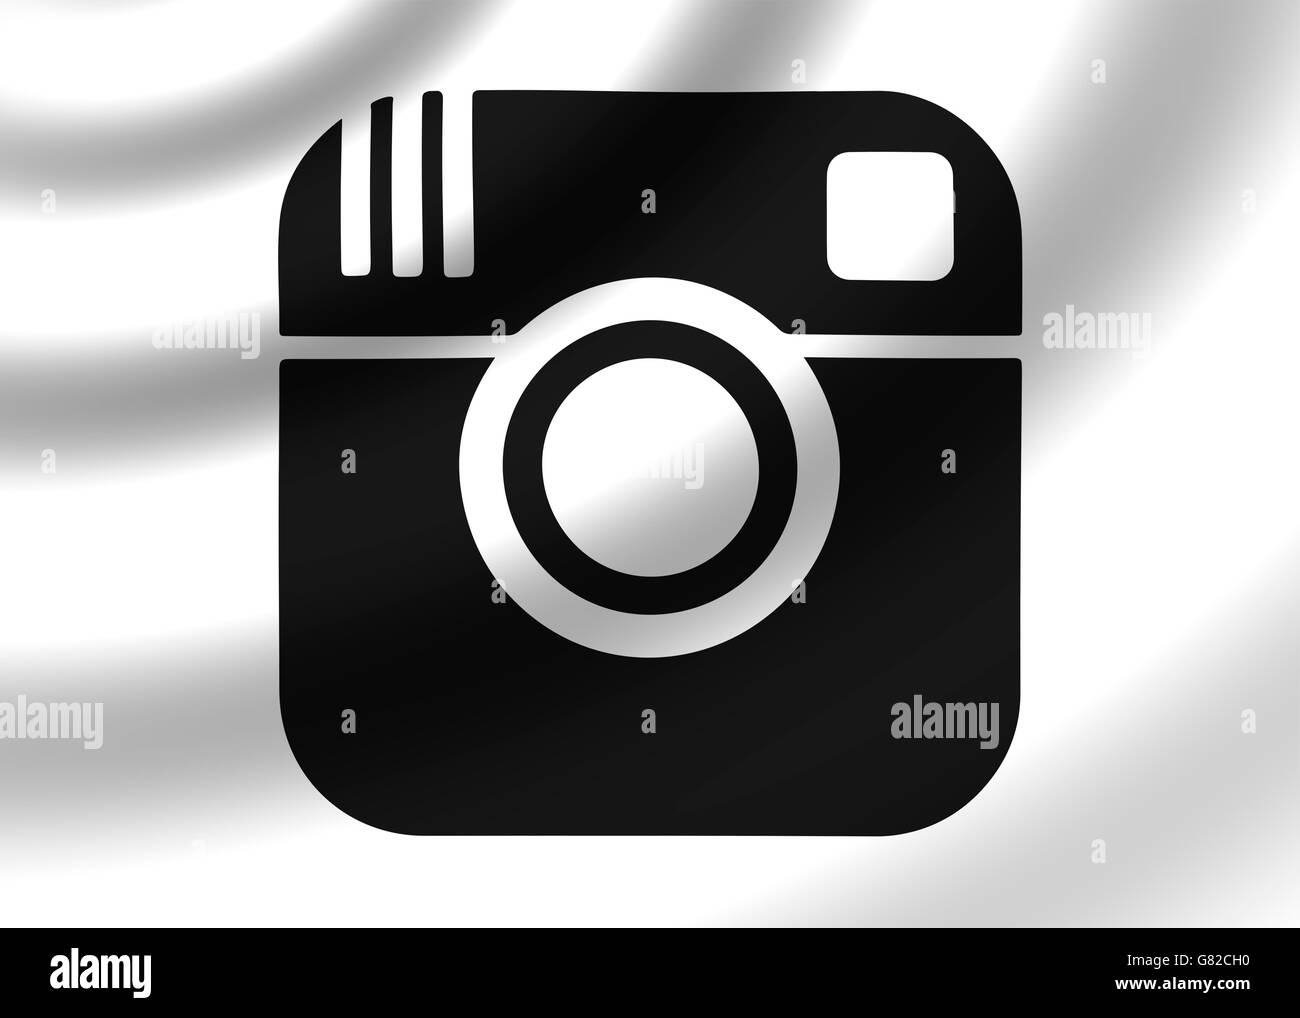 Instagram logo Stock Photo